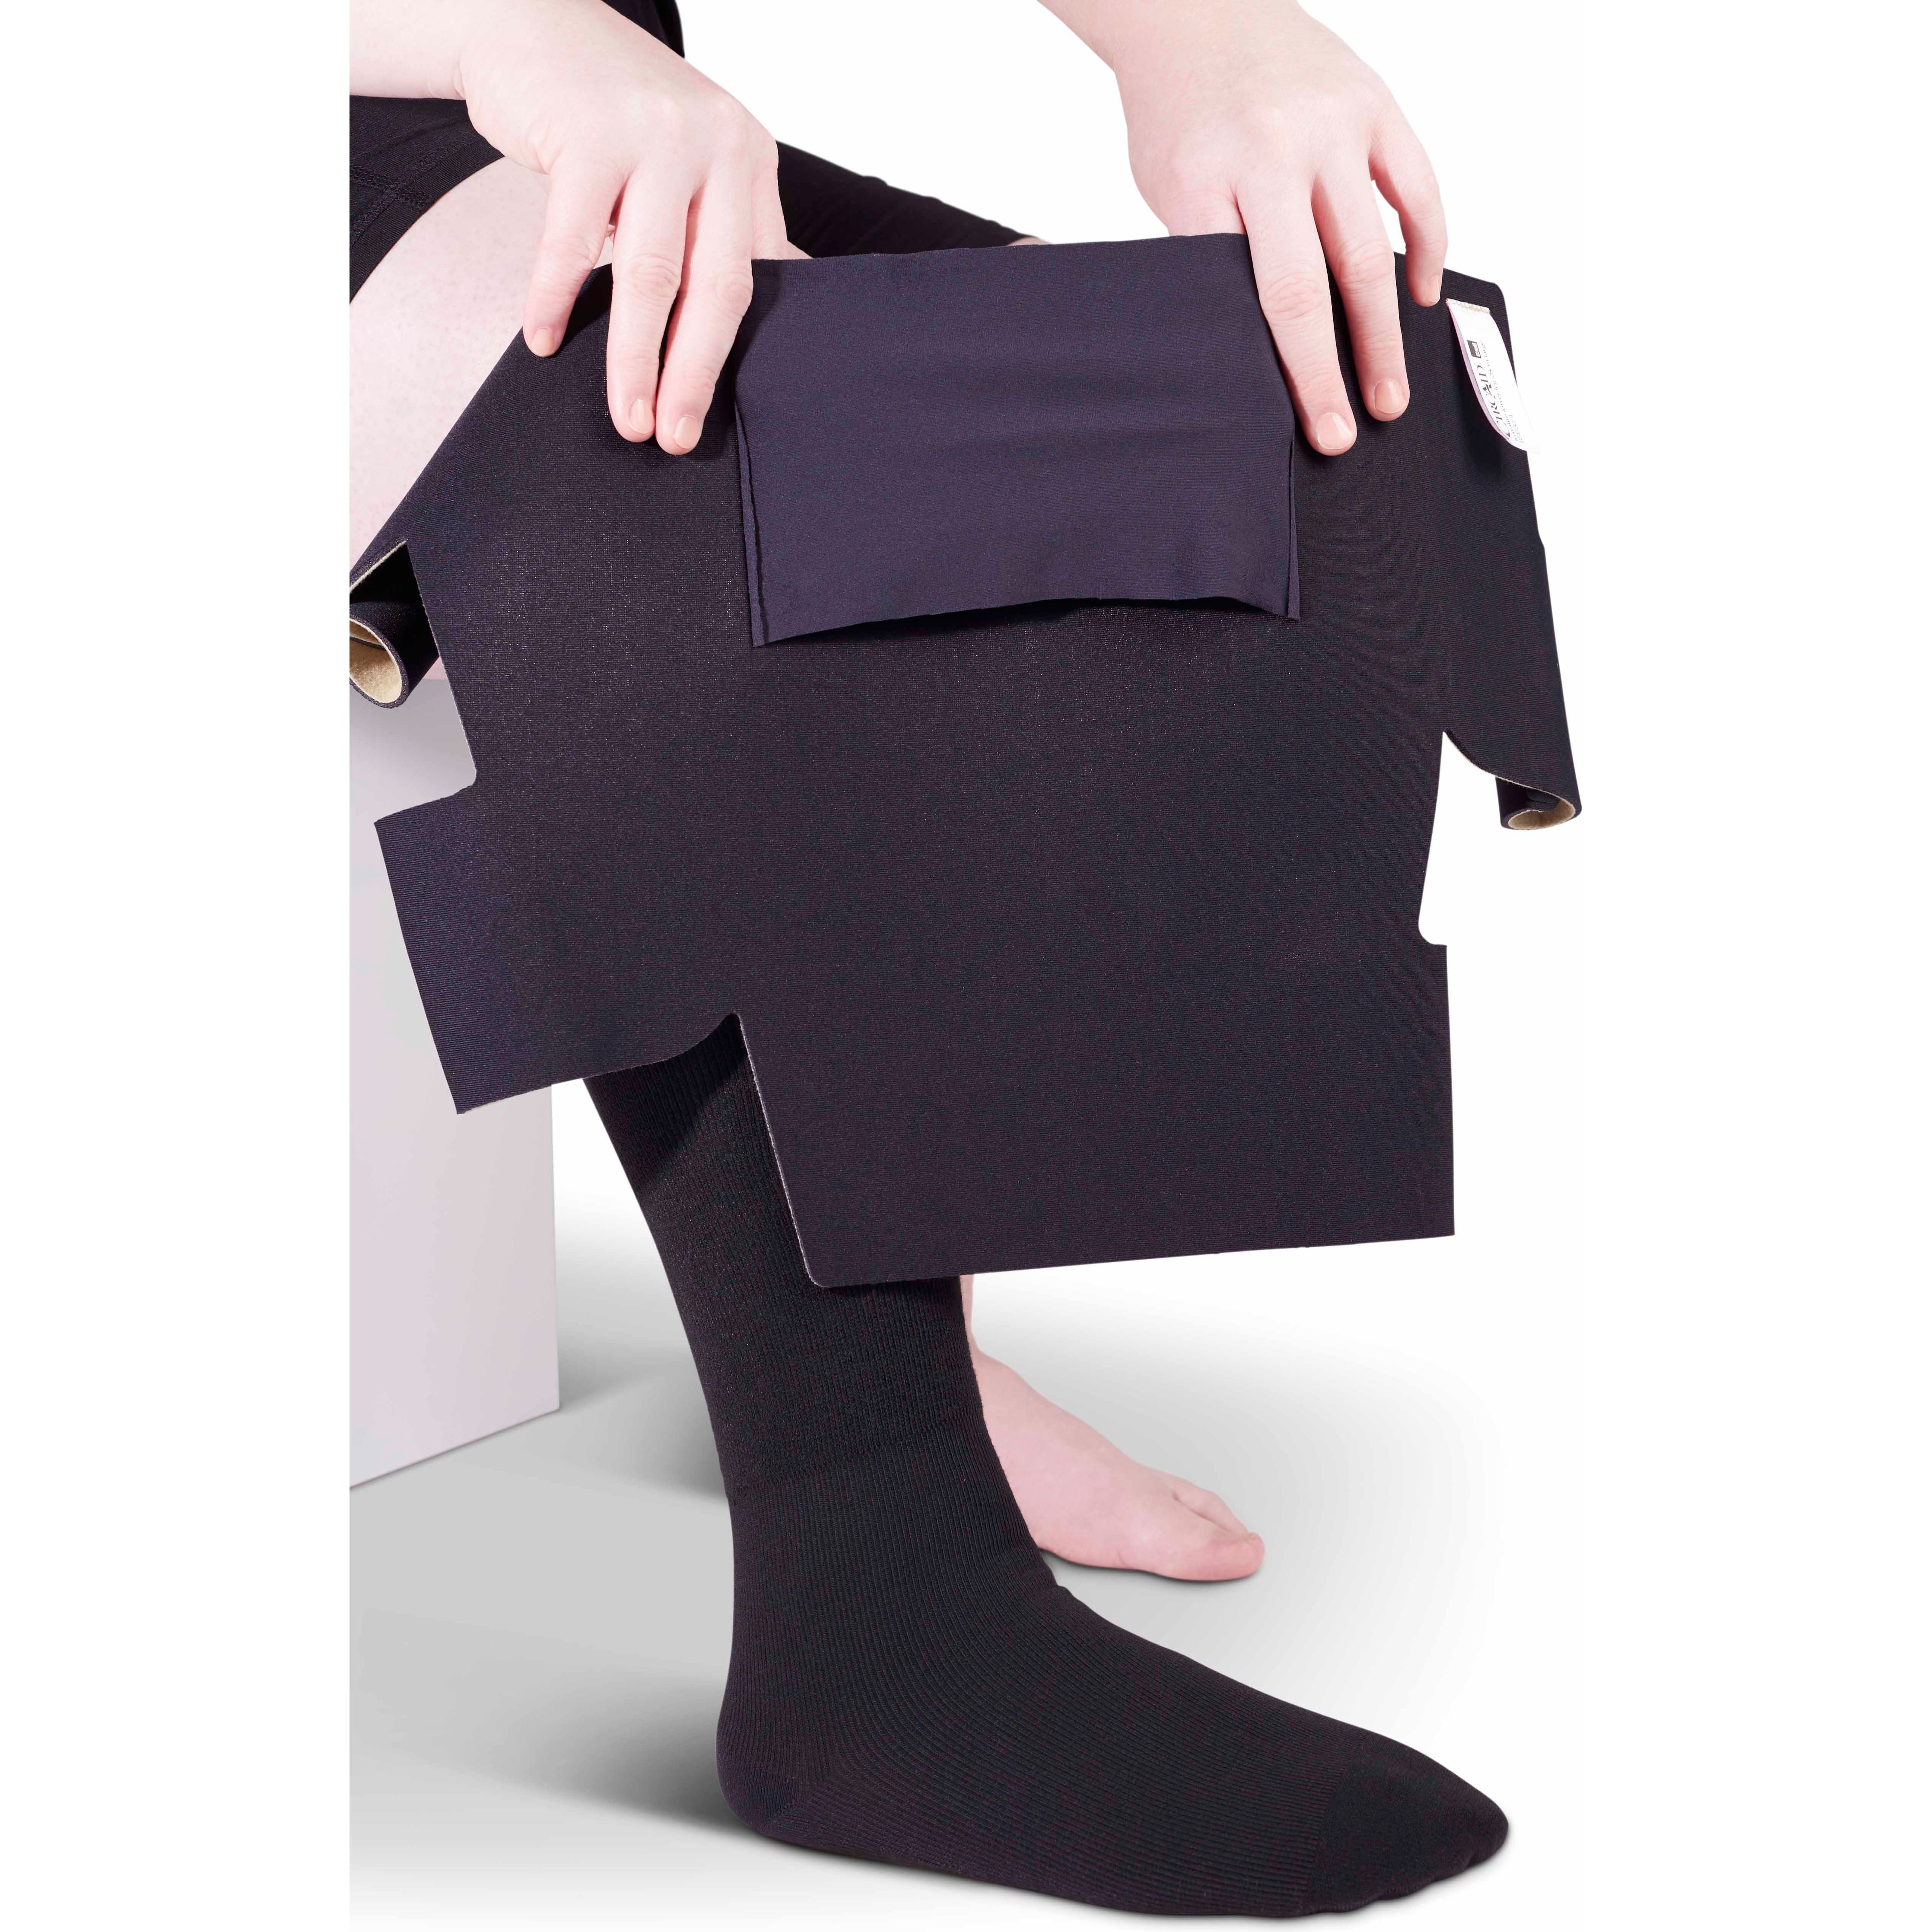 Circaid ® Wrap - Juxtalite Lower Leg Compression